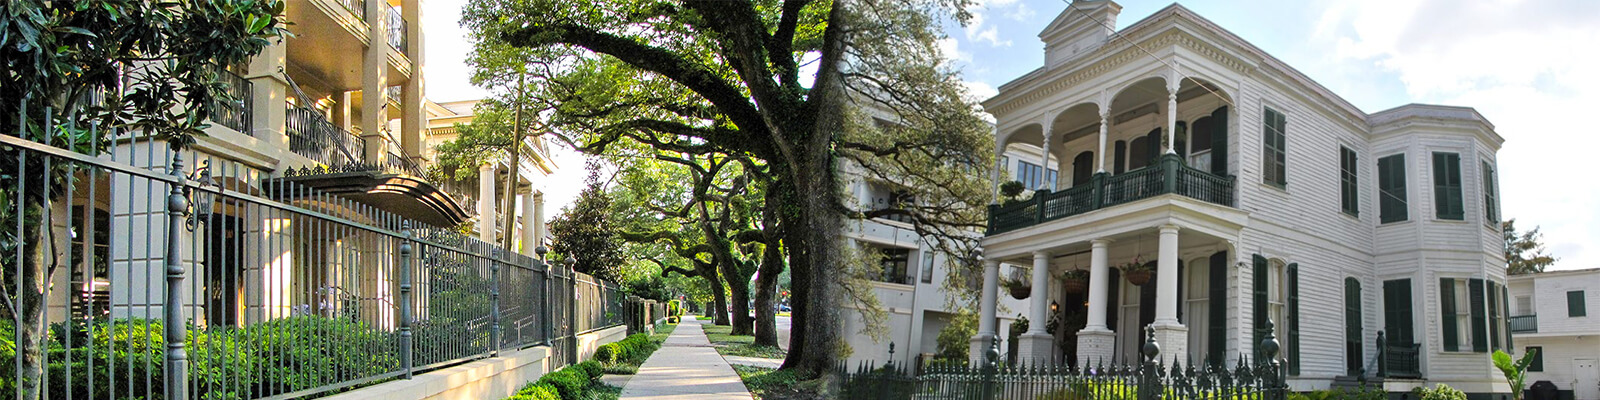 New Orleans Original Garden District Walking Tour Coupons